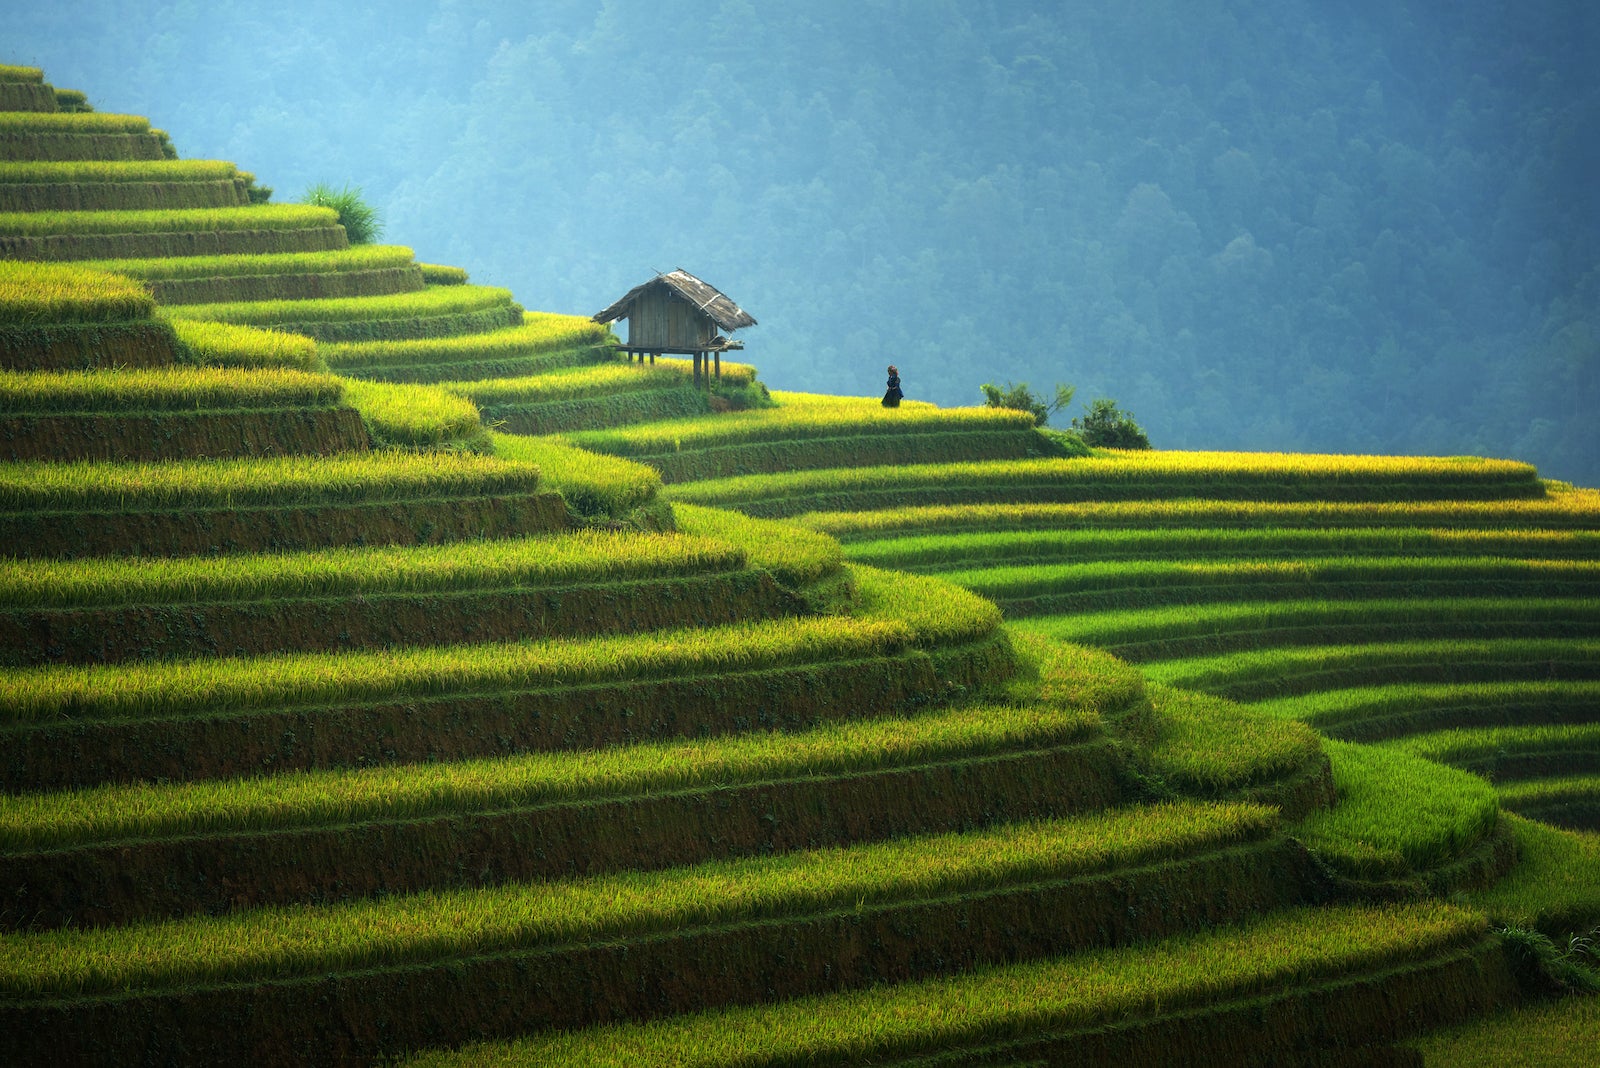 Rice fields on terraced in rainny season at Mu cang chai, Vietnam.